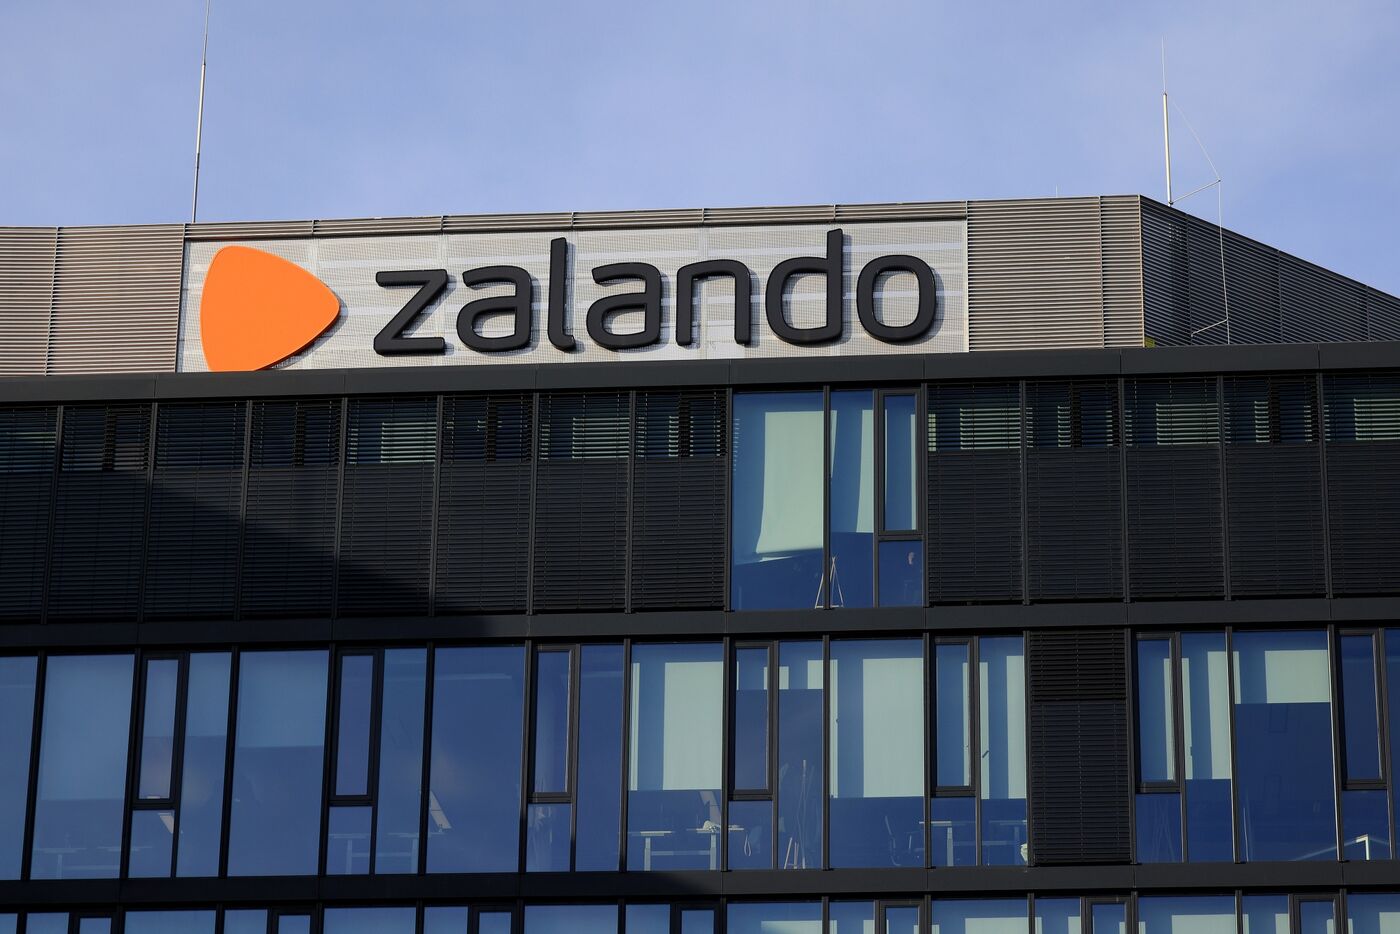 Zalando to Halt ‘Misleading’ Green Claims After EU Probe - Bloomberg